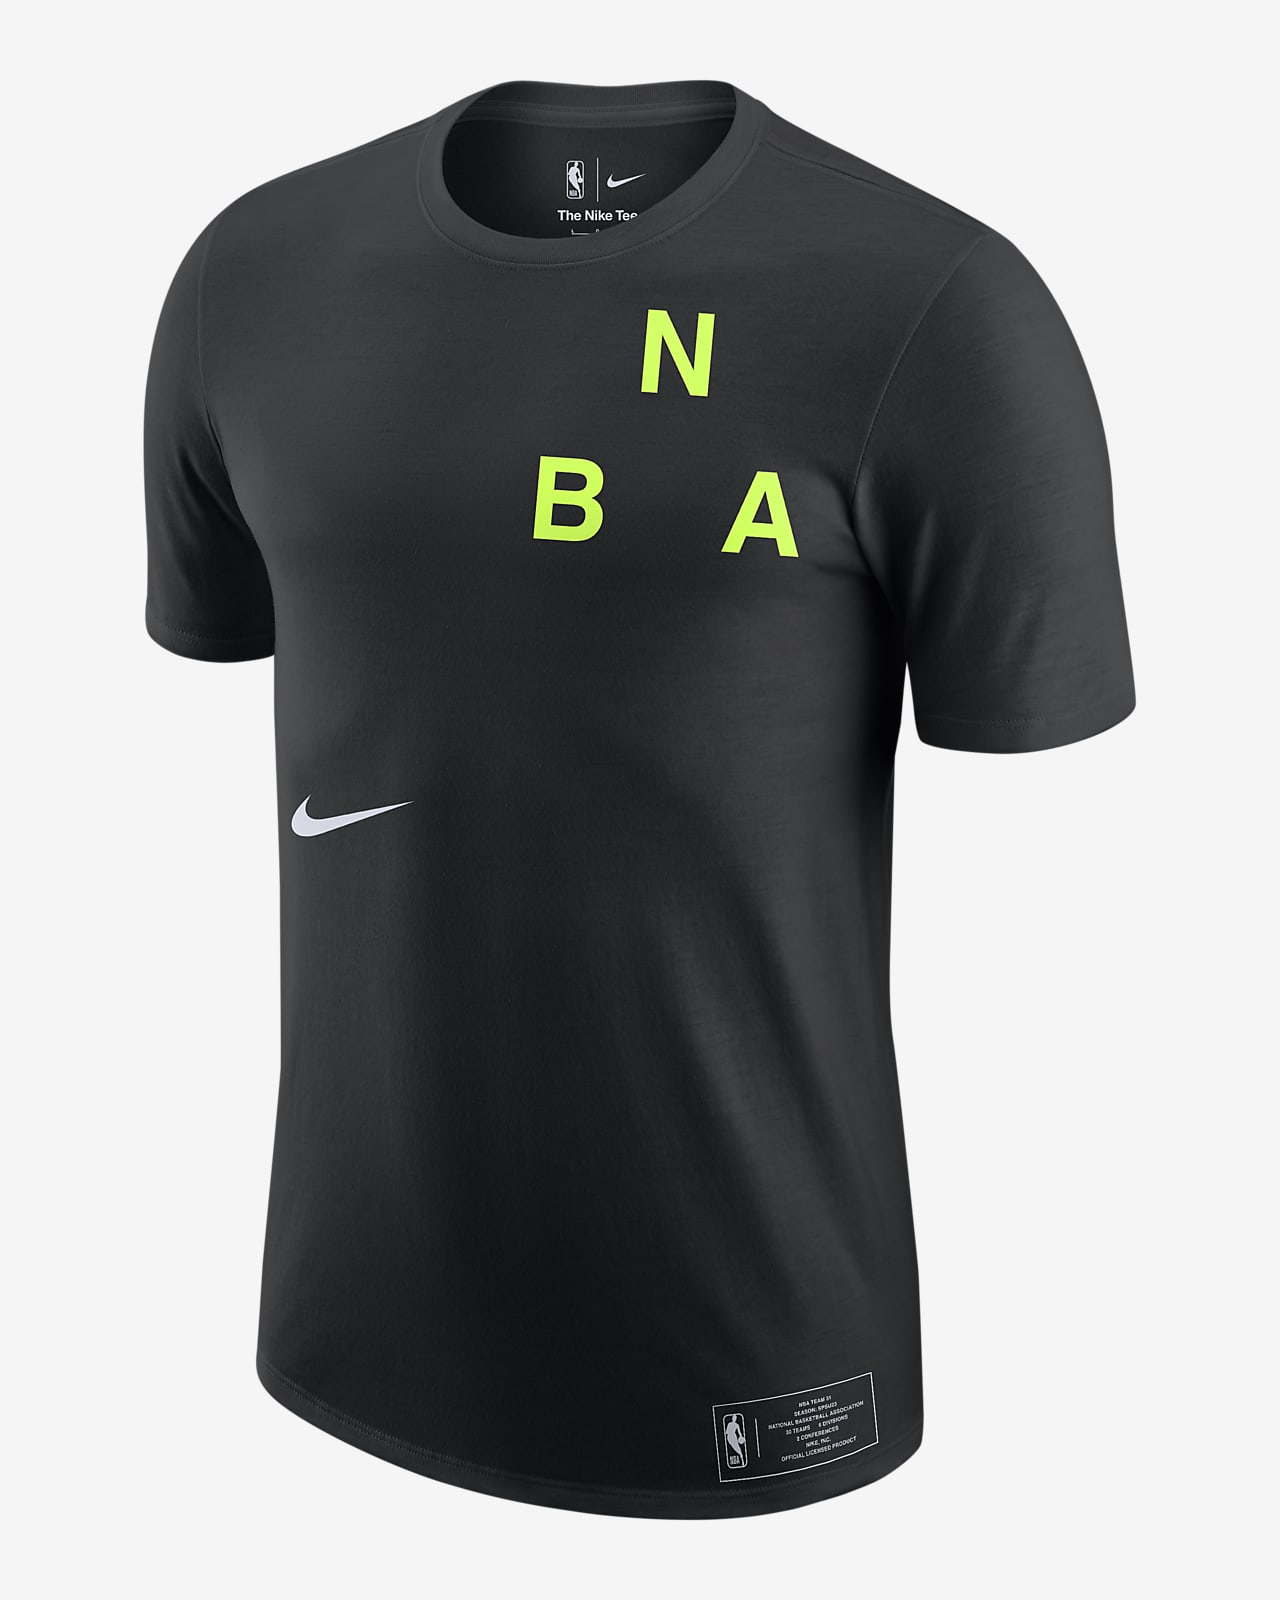 Team 31 Essential Men's Nike NBA T-Shirt